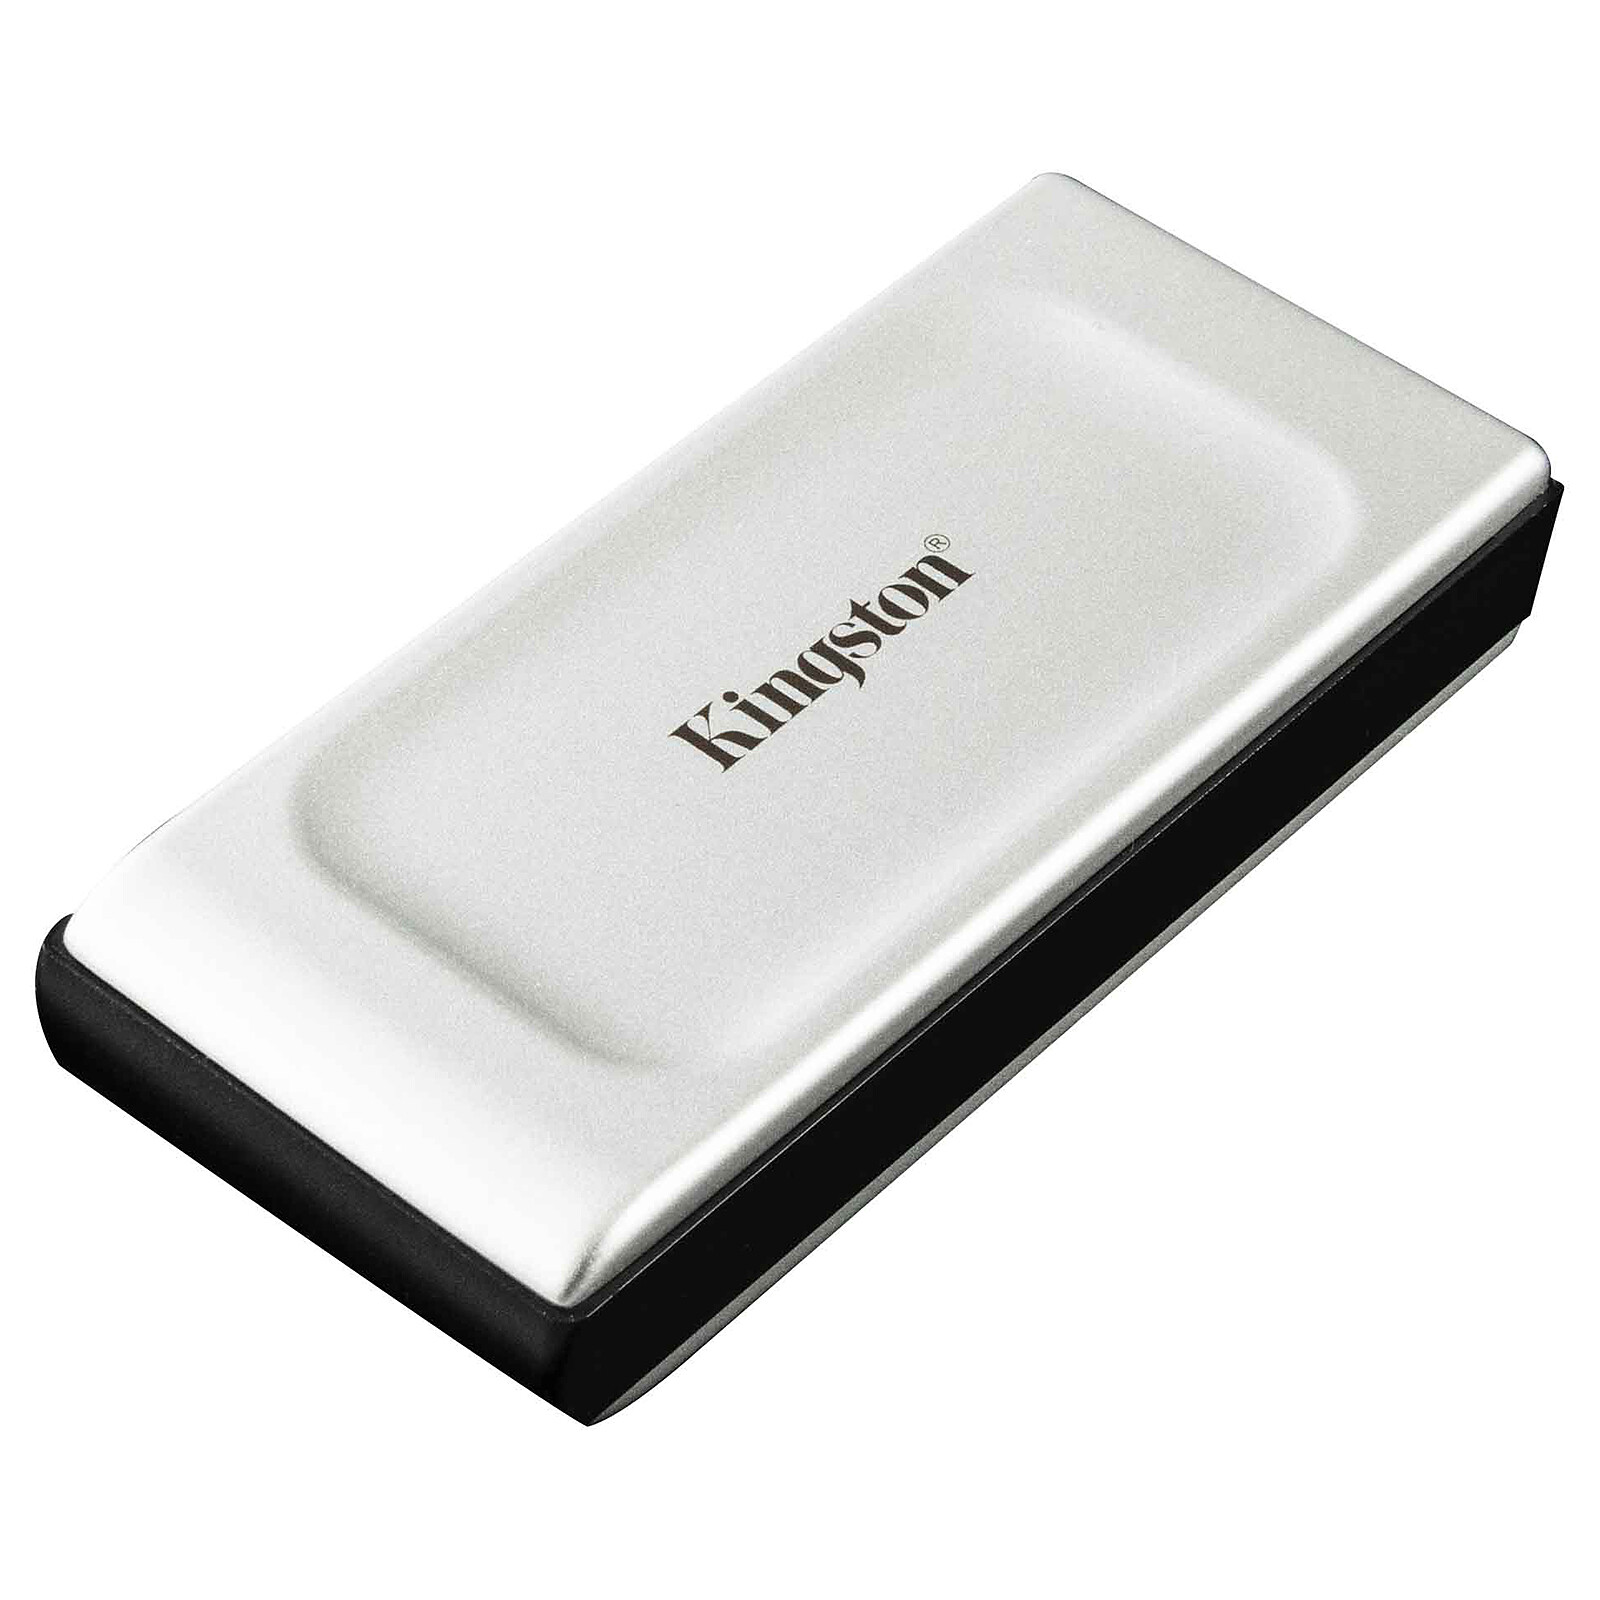 Samsung Portable SSD T7 1Tb Grey - Disco duro externo - LDLC